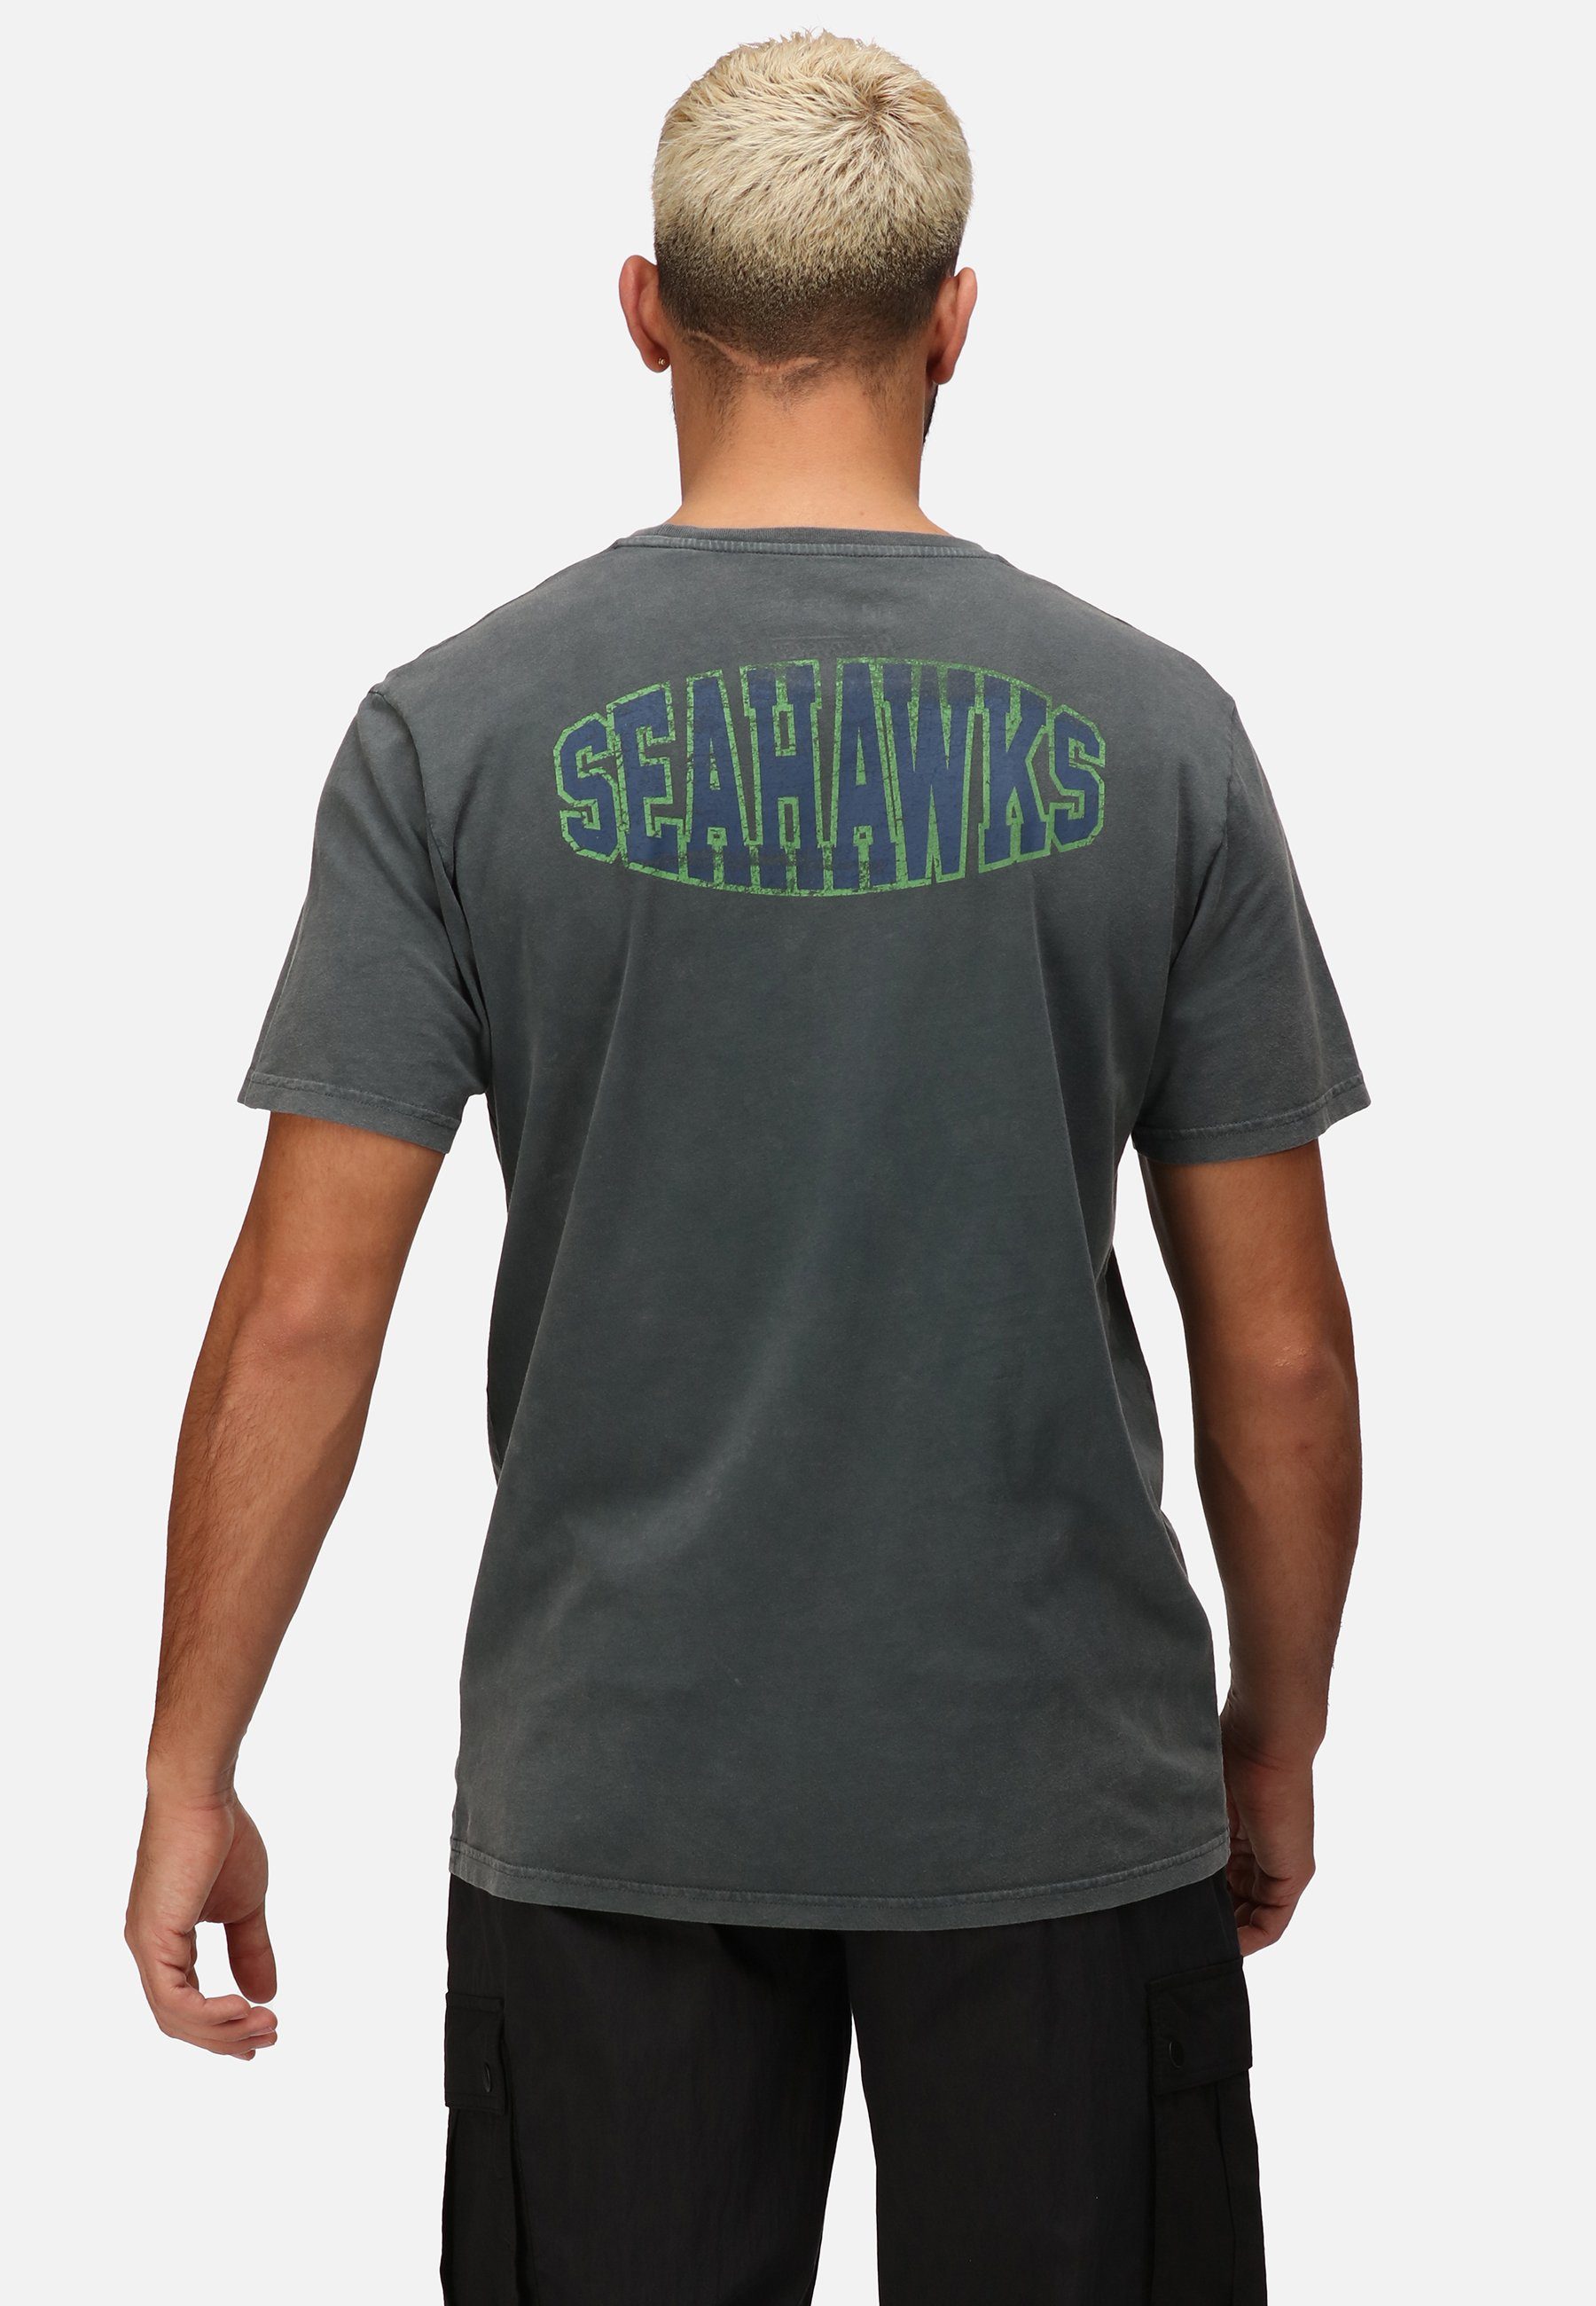 Recovered T-Shirt NFL Bio-Baumwolle SEAHAWKS COLLEGE GOTS zertifizierte